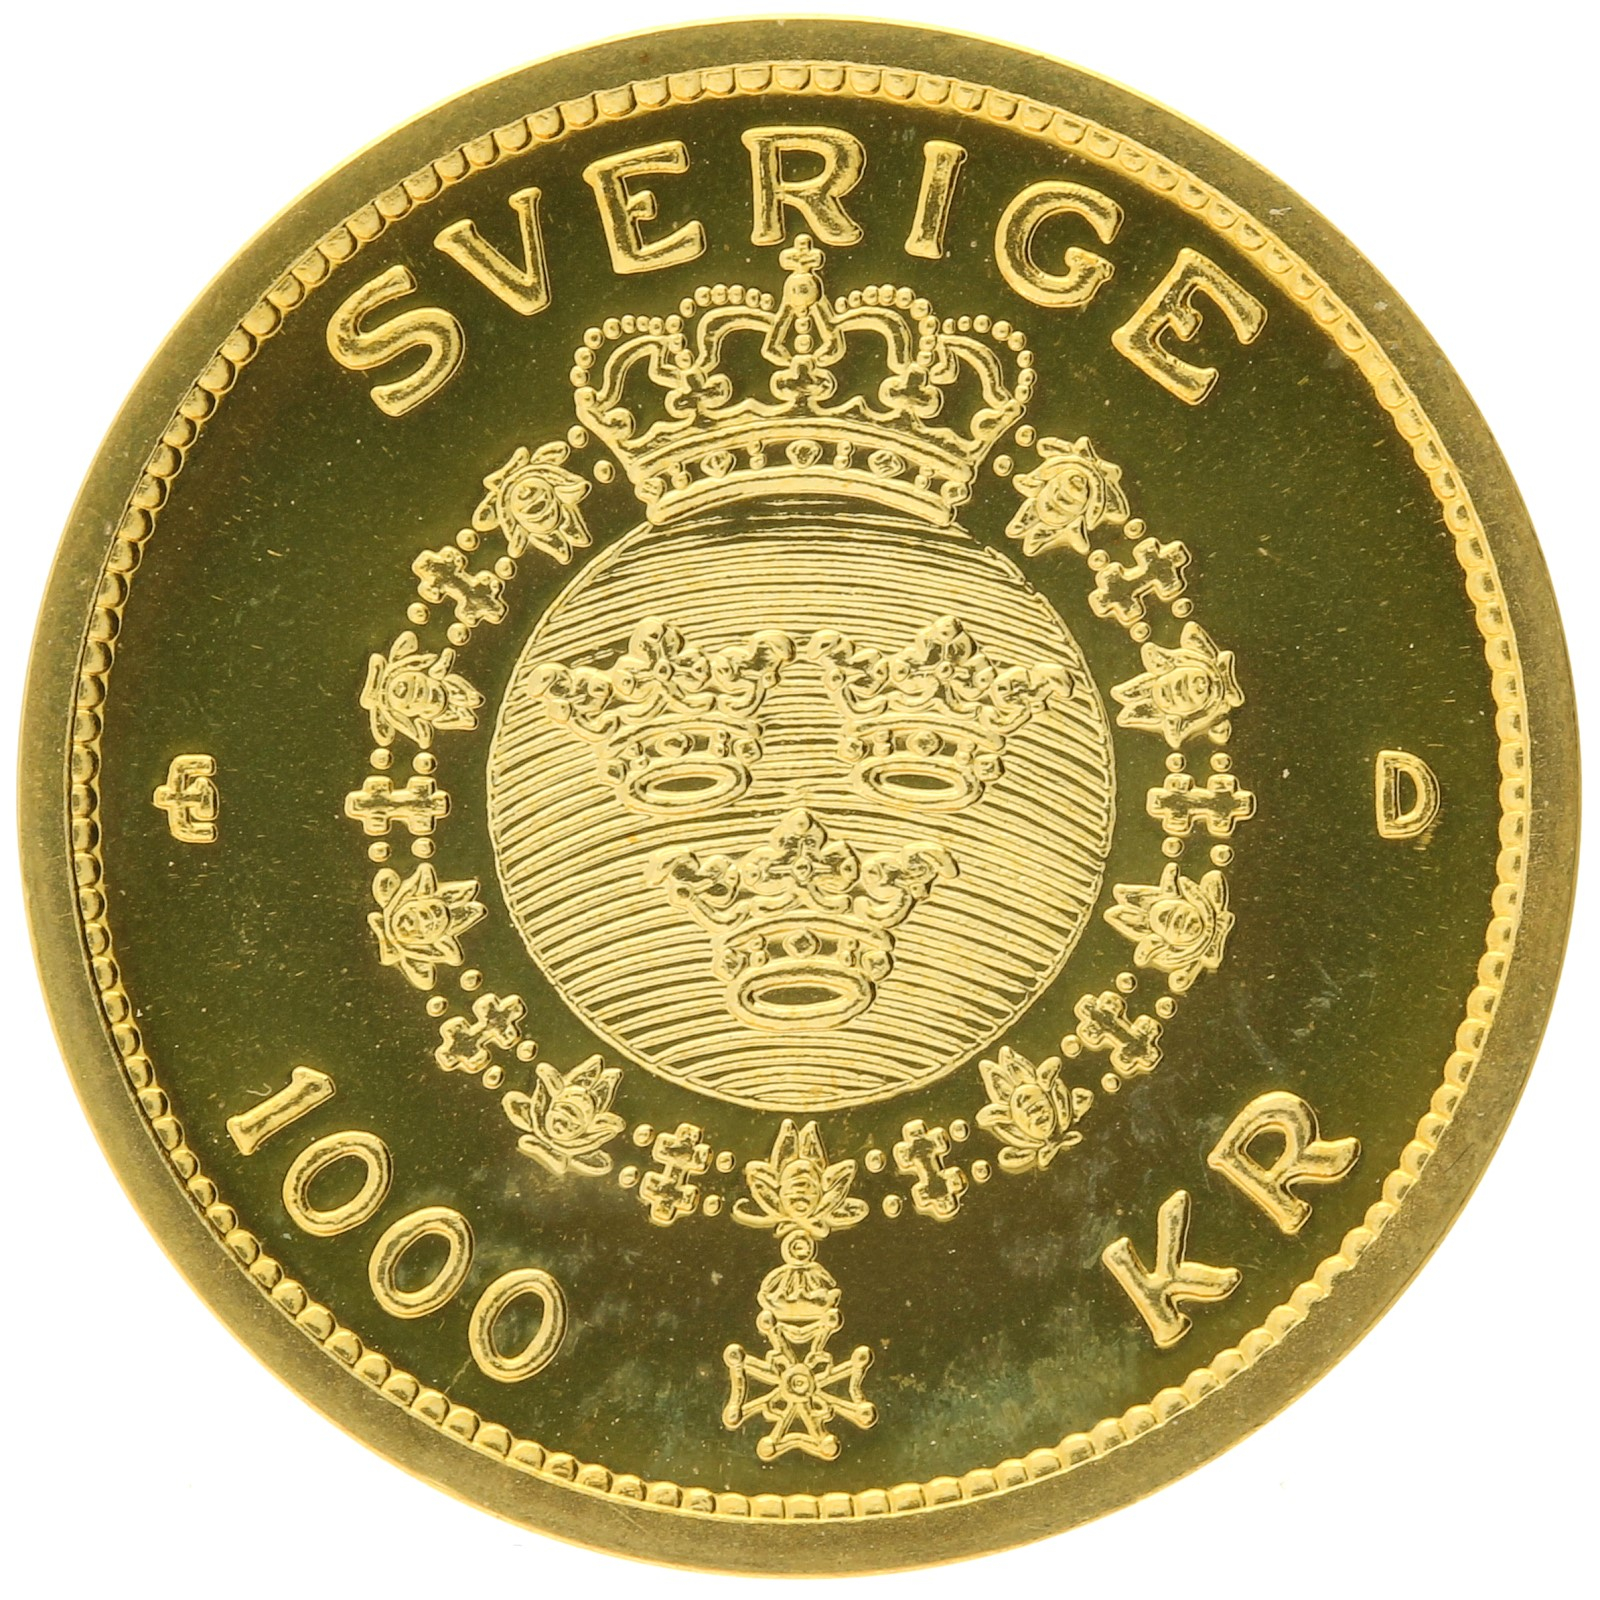 Sweden - 1000 Kronor - 1992 - Carl XVI Gustaf - Death of Gustav III 